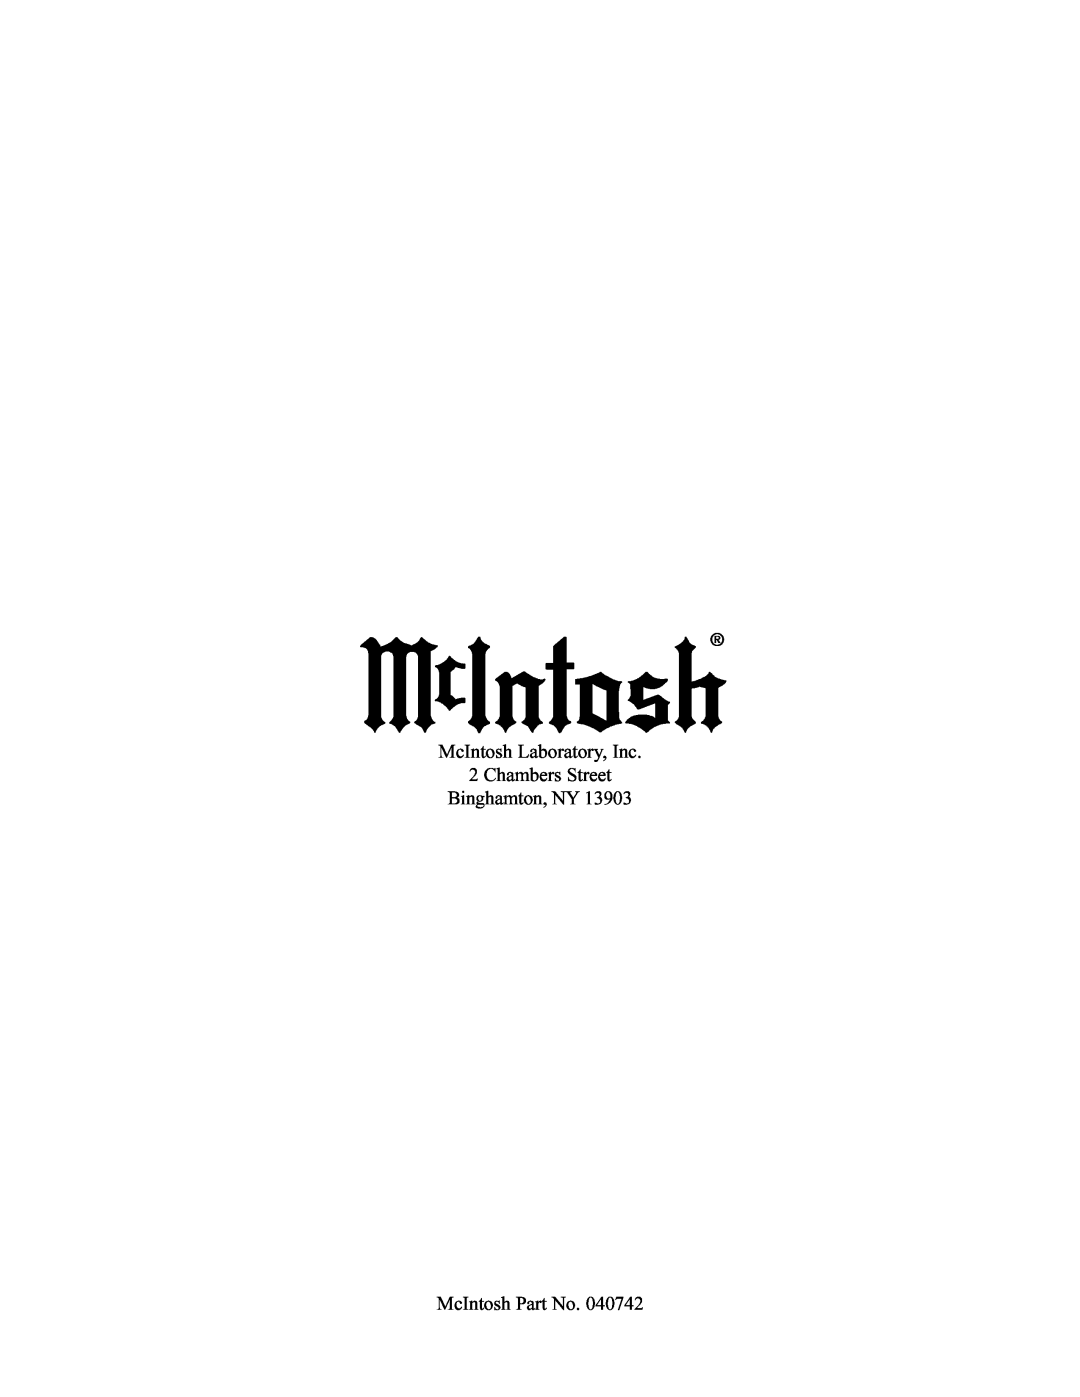 McIntosh MC2102 manual McIntosh Laboratory, Inc 2 Chambers Street, Binghamton, NY, McIntosh Part No 